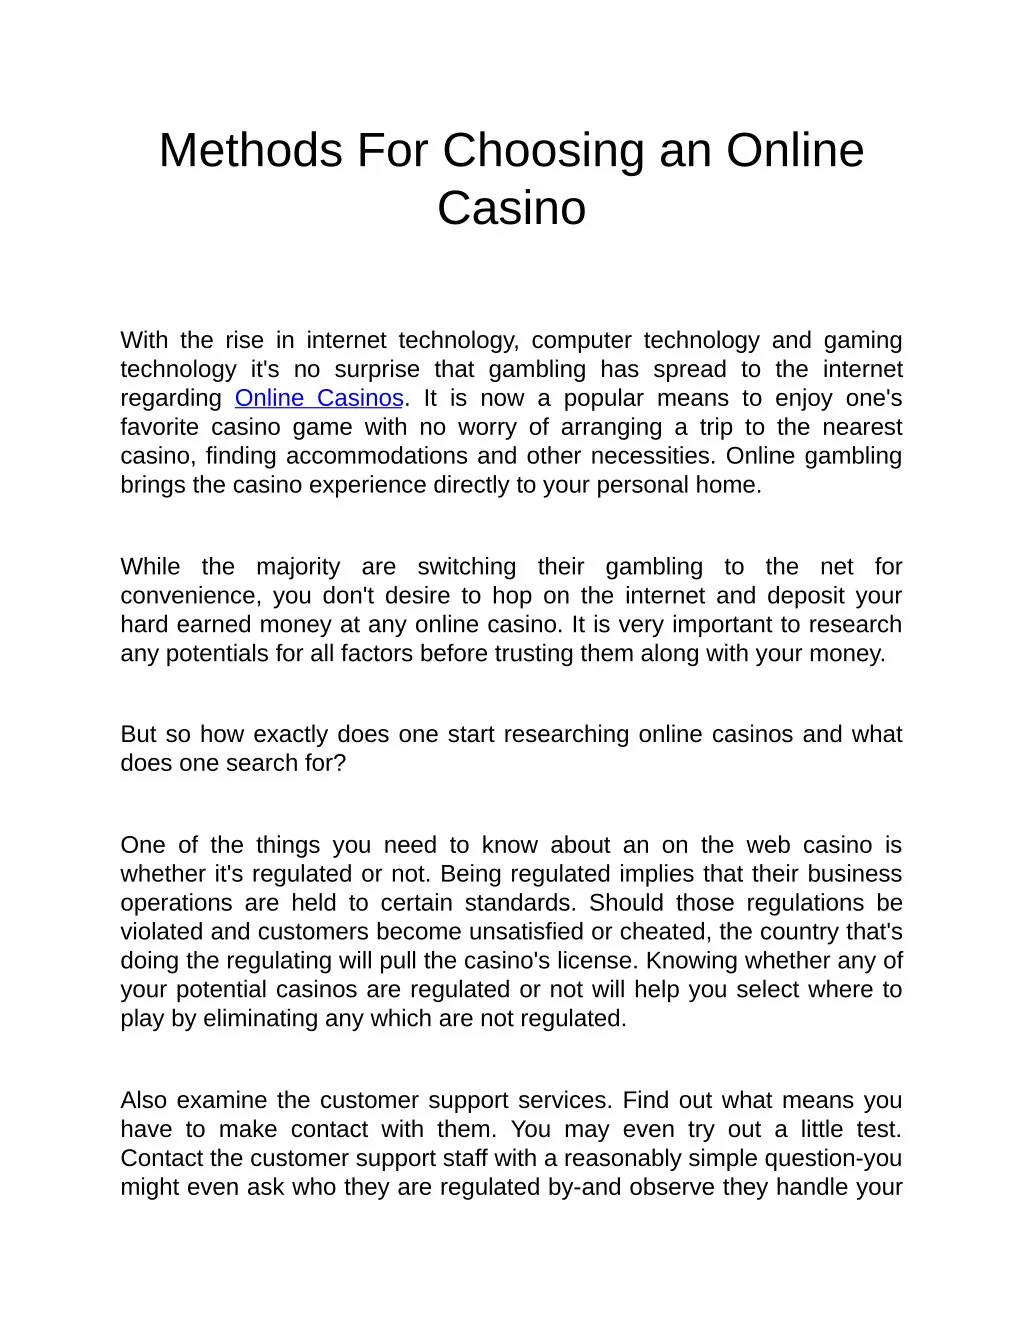 methods for choosing an online casino n.